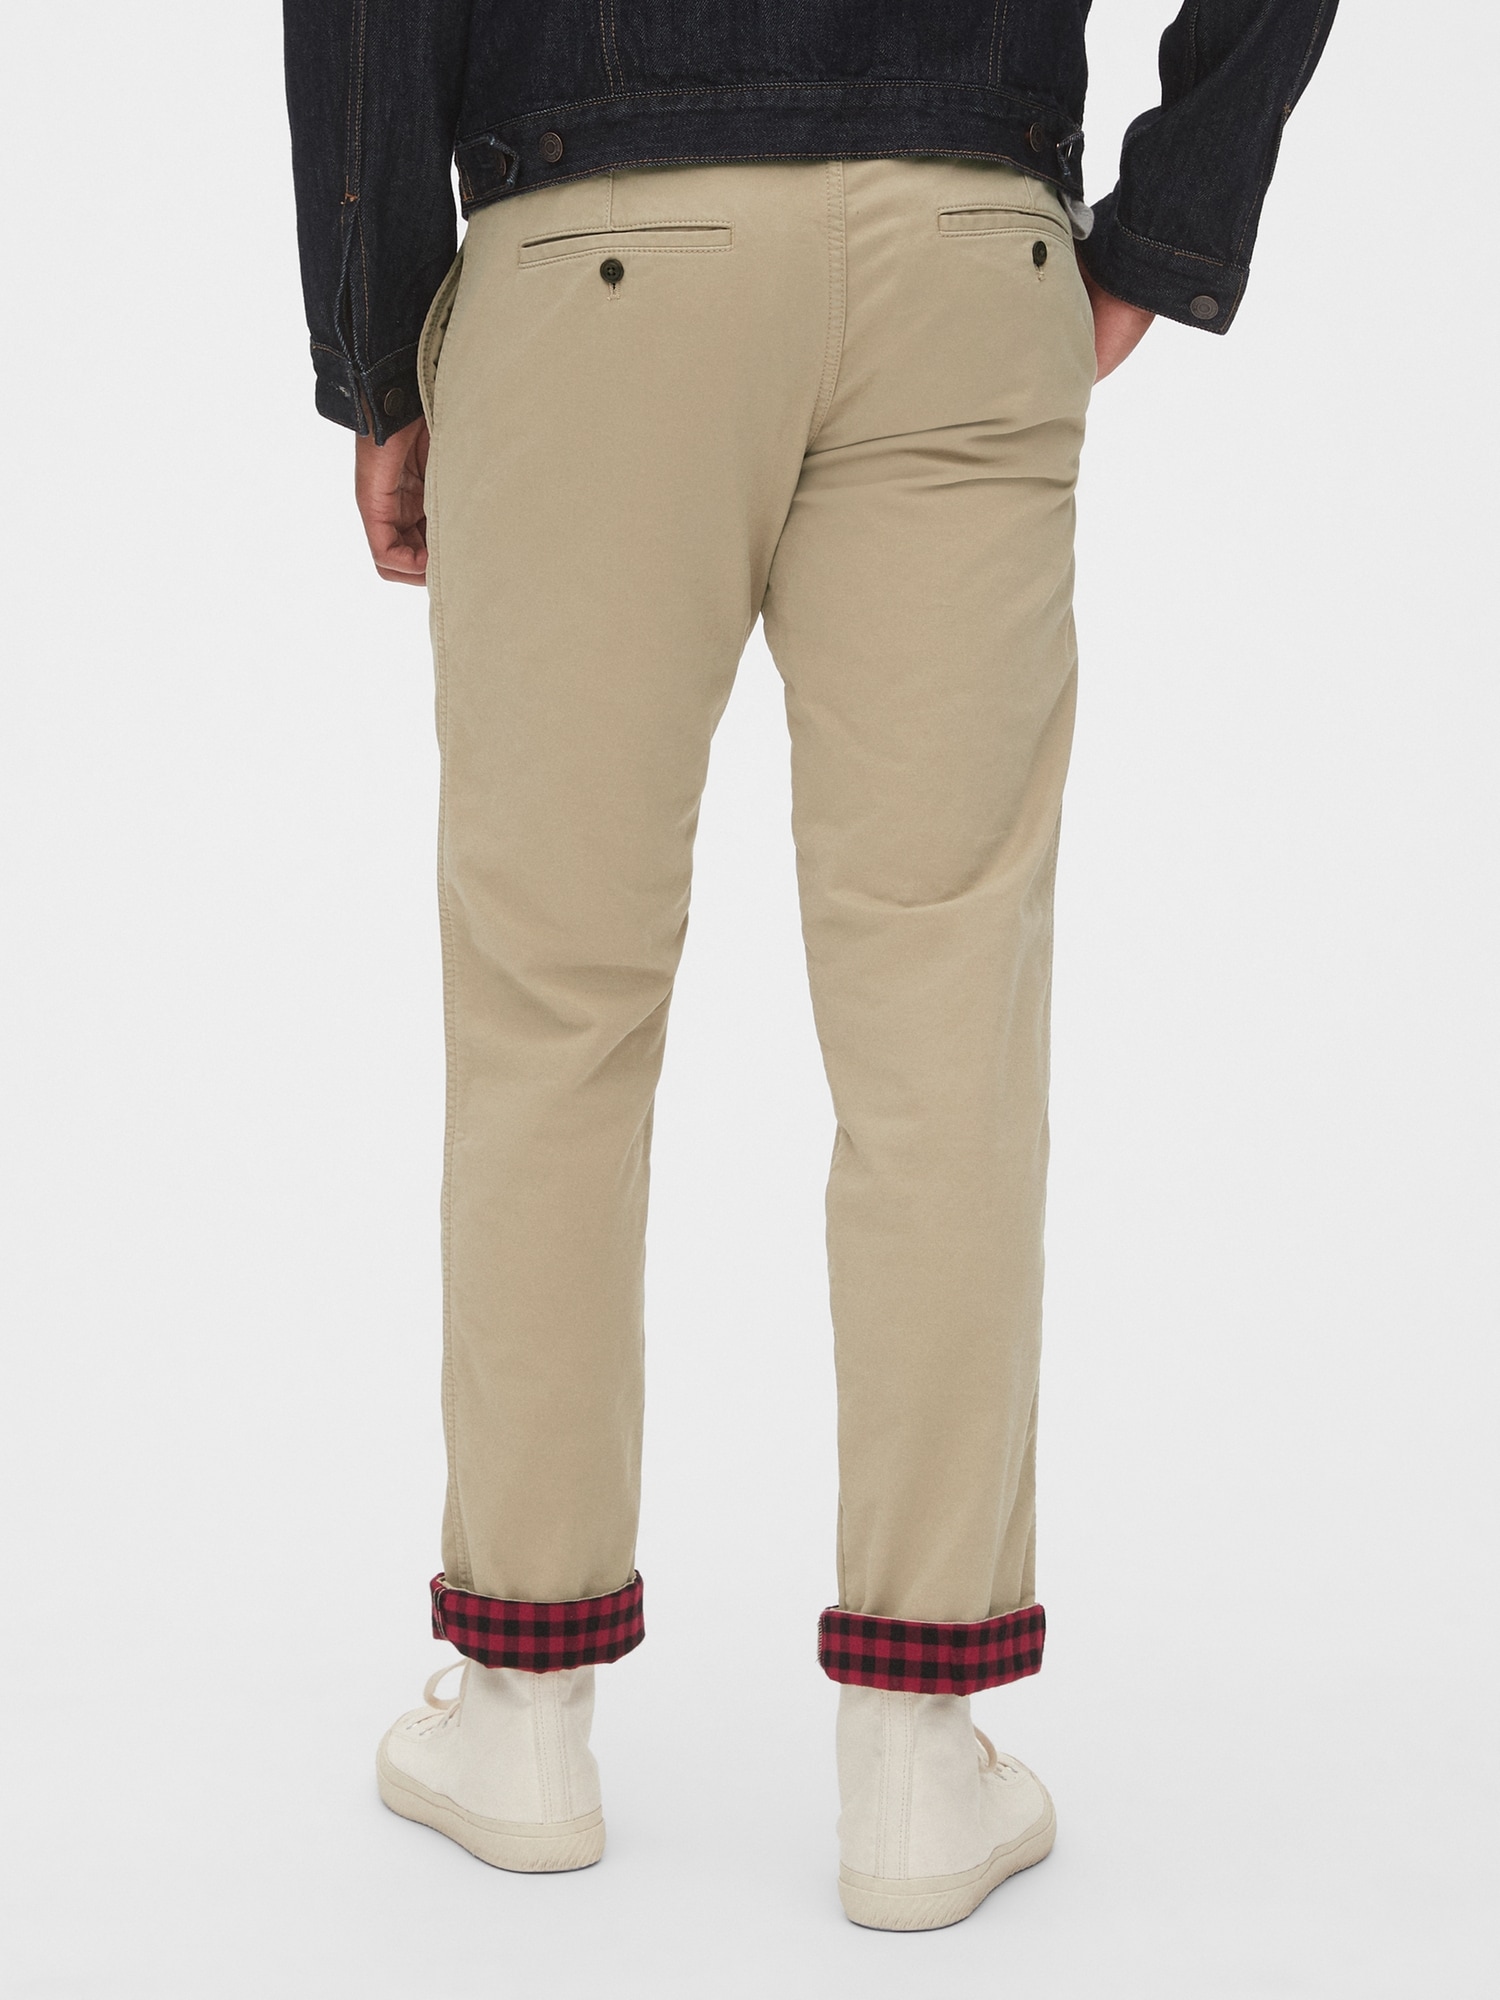 gap fleece lined pants